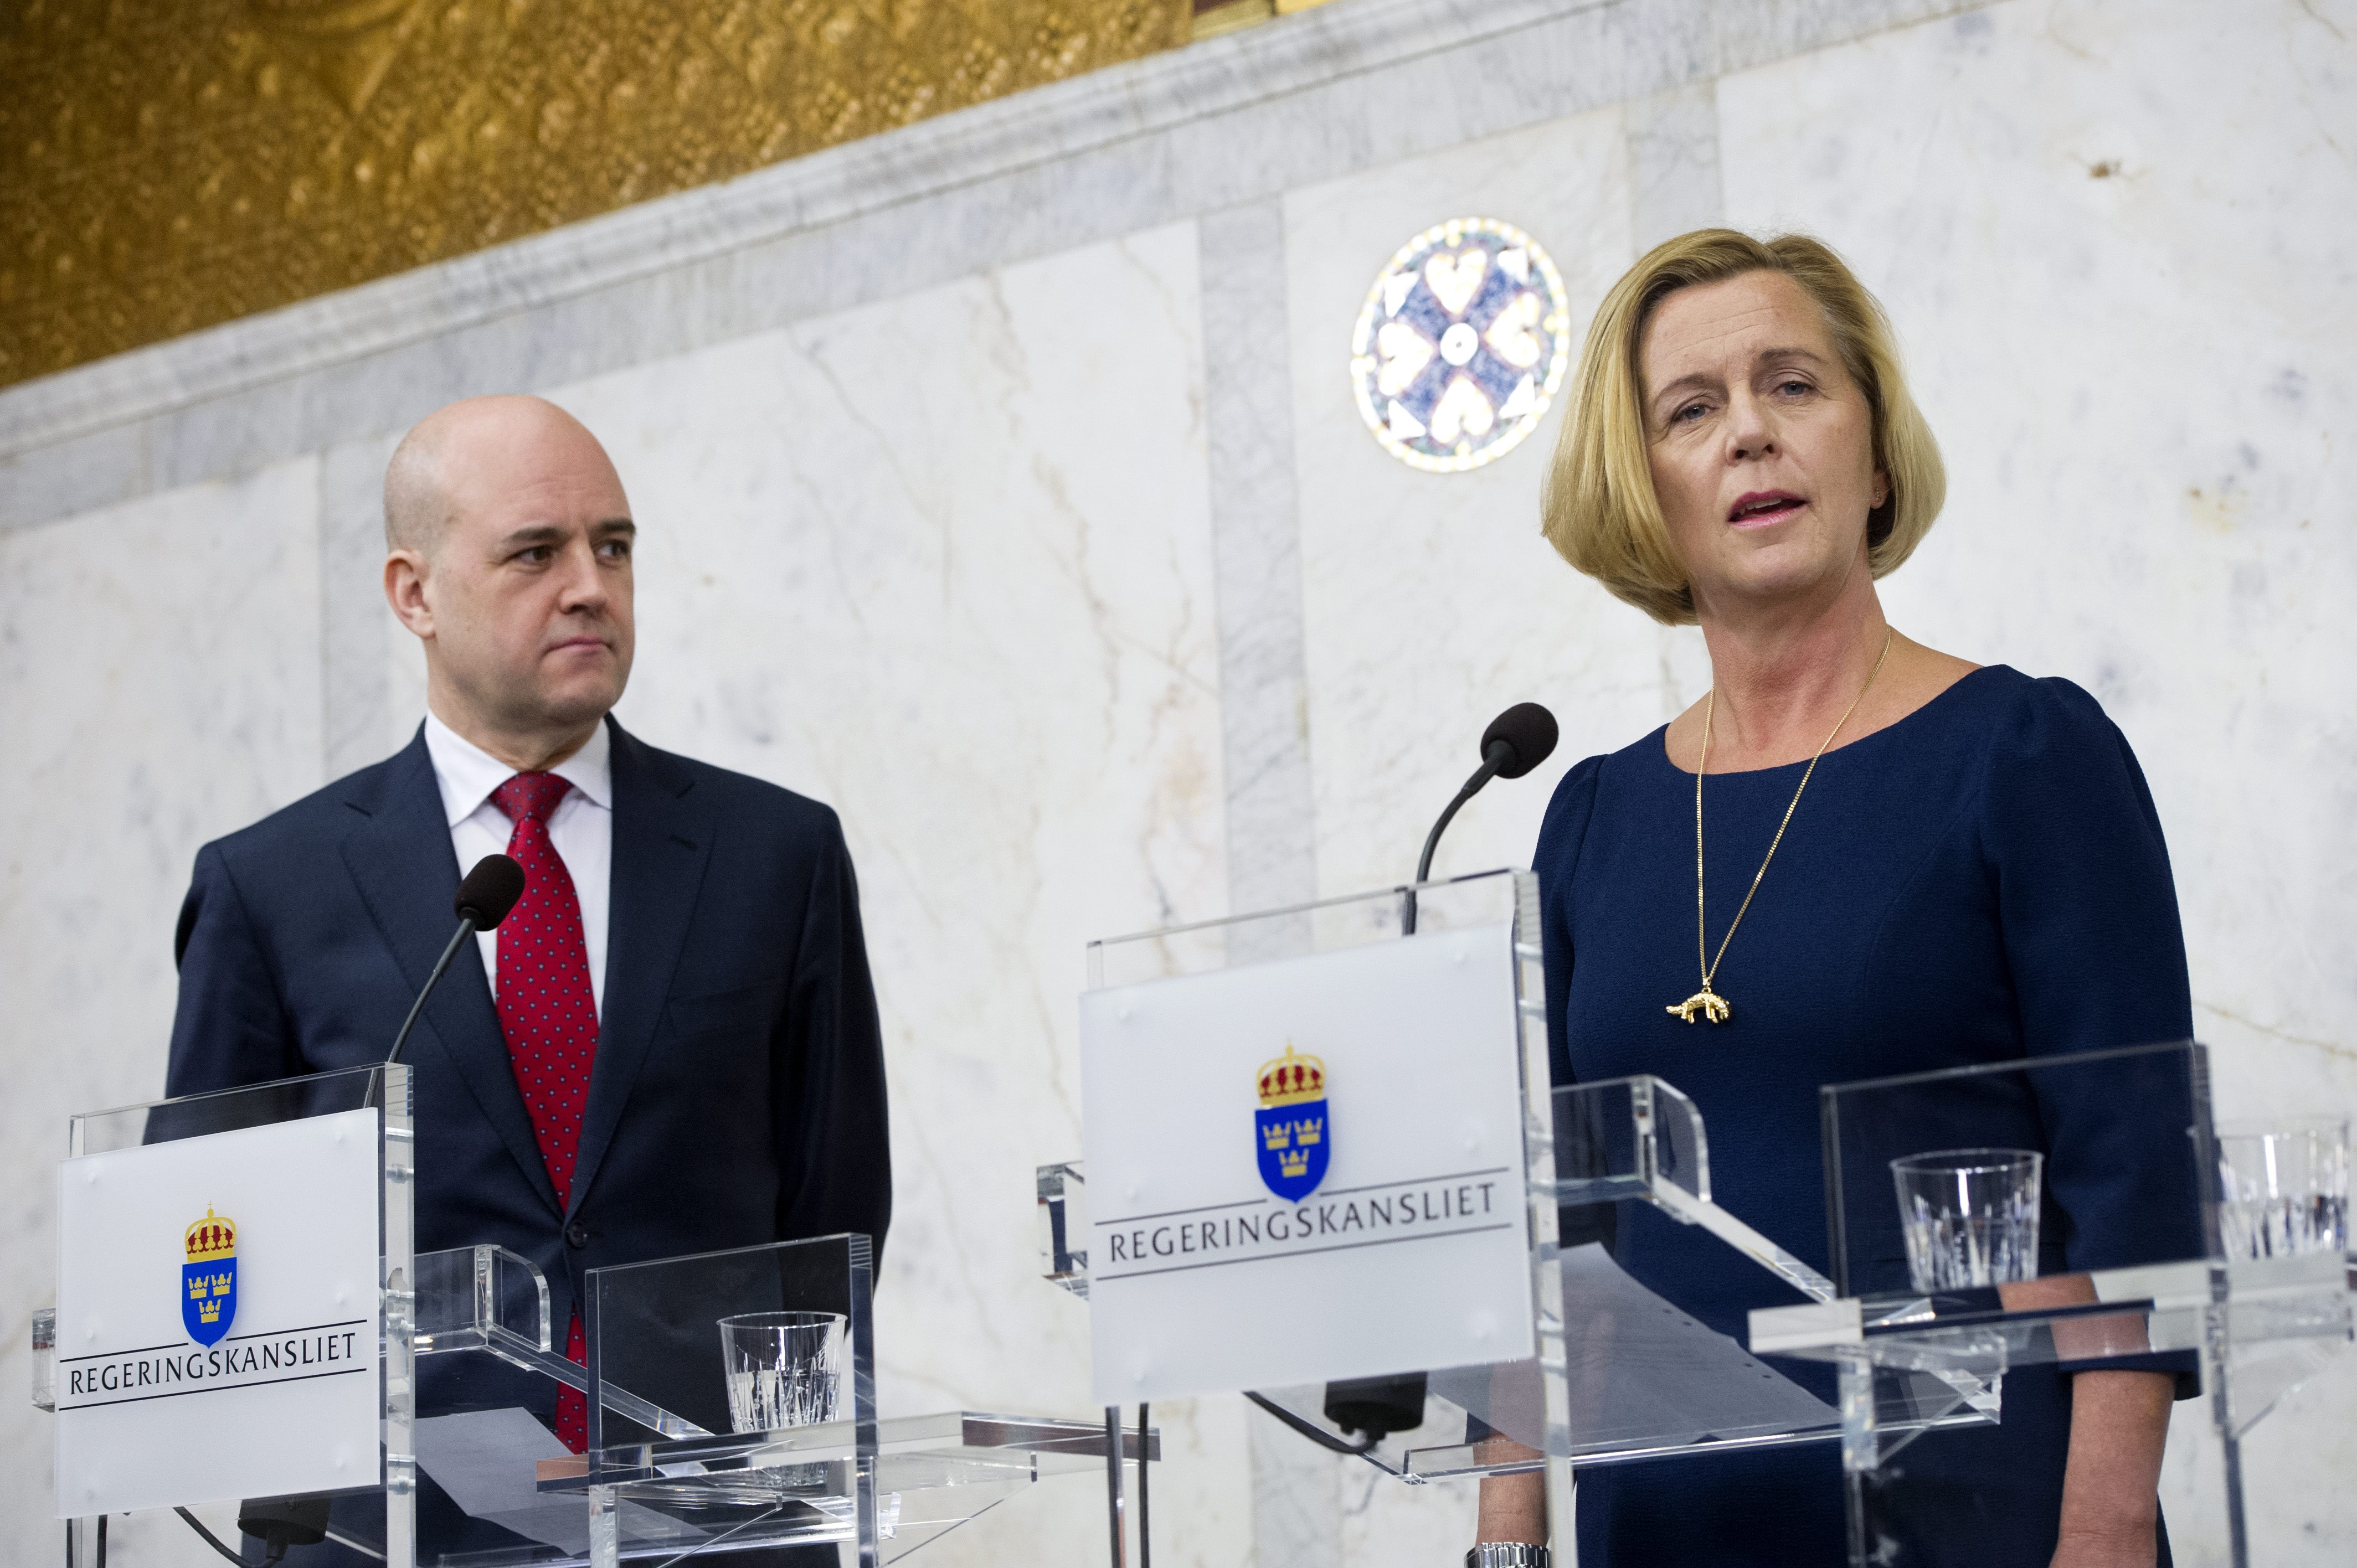 Jämställdhetsminister, Jan Björklund, Kvotering, Fredrik Reinfeldt, Feminism, Maria Arnholm